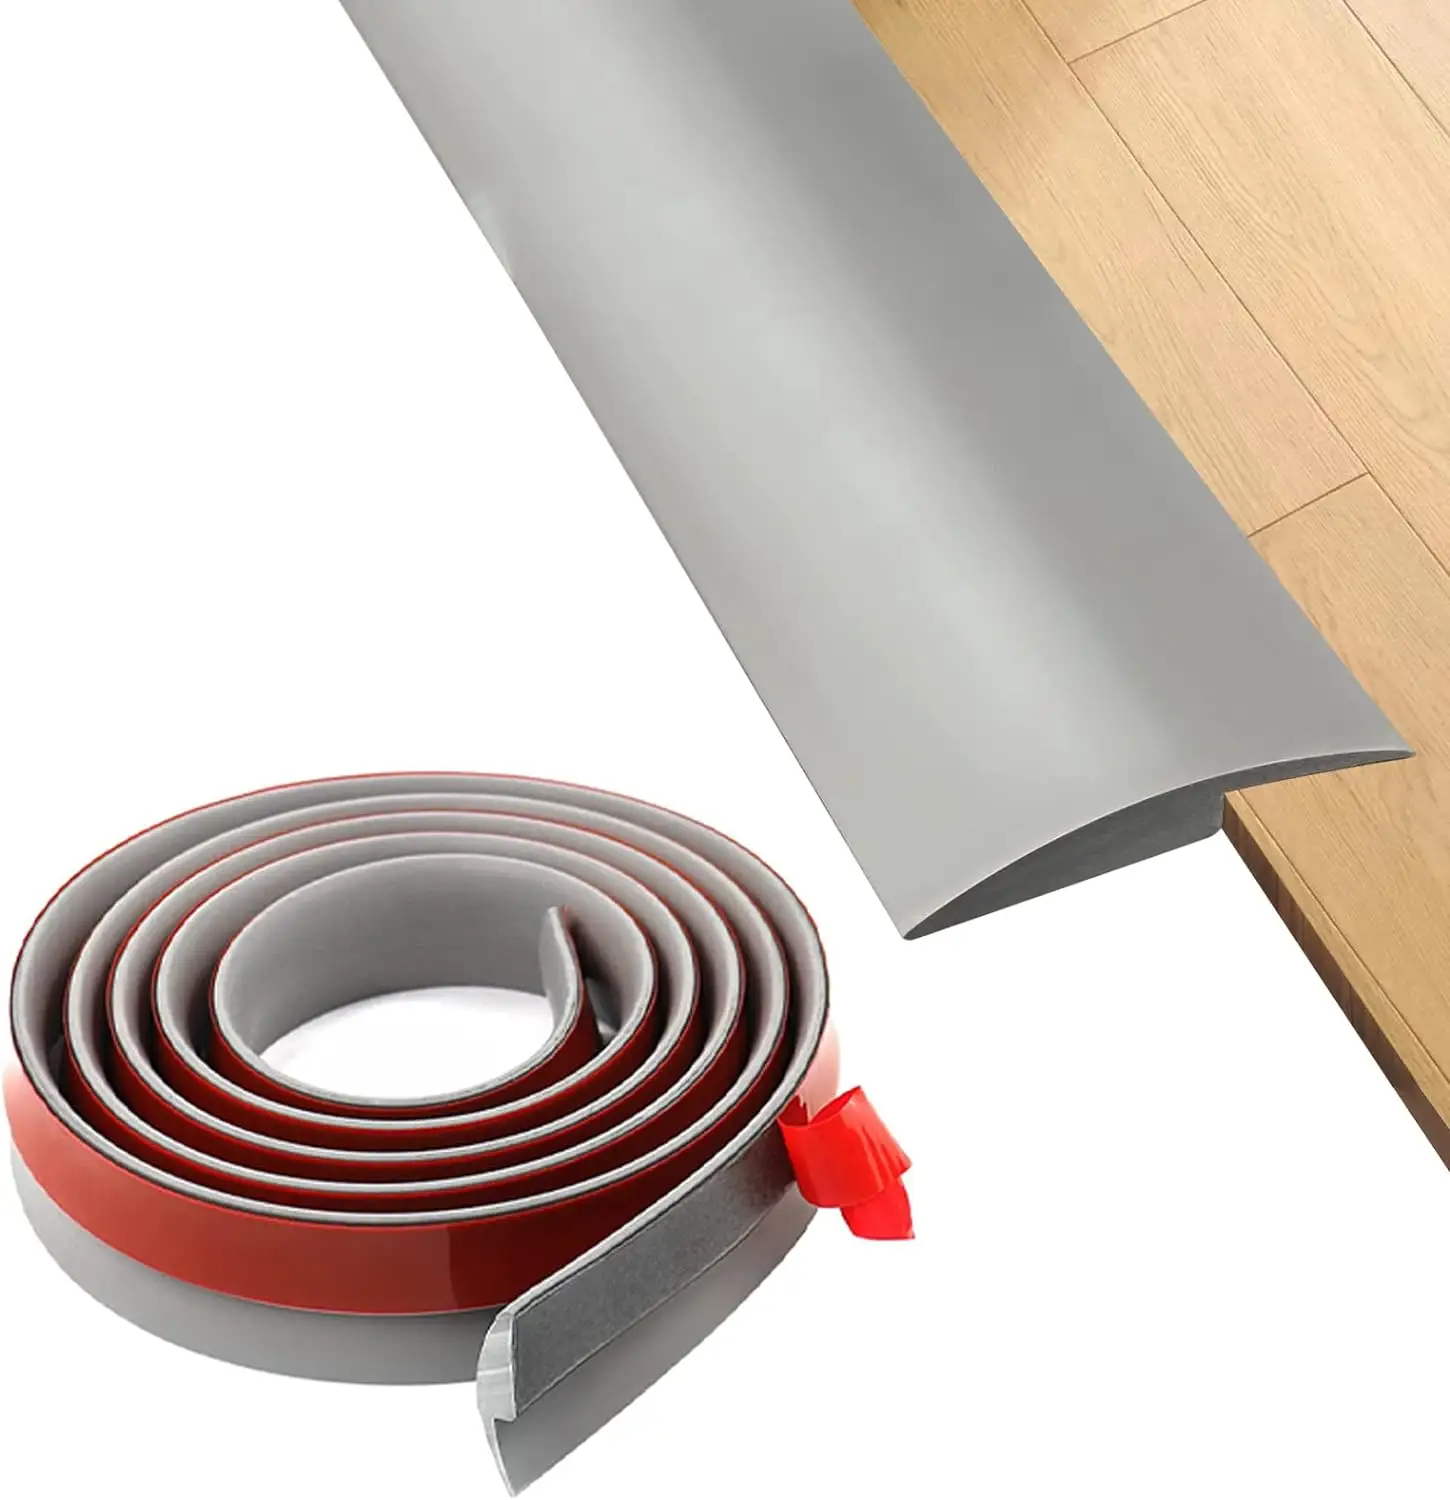 3.28Ft Flexible Rubber Floor Transition Strip PVC Vinyl Self-Adhesive Edging Trim for Laminate, Carpet, Doorway Edge Threshold